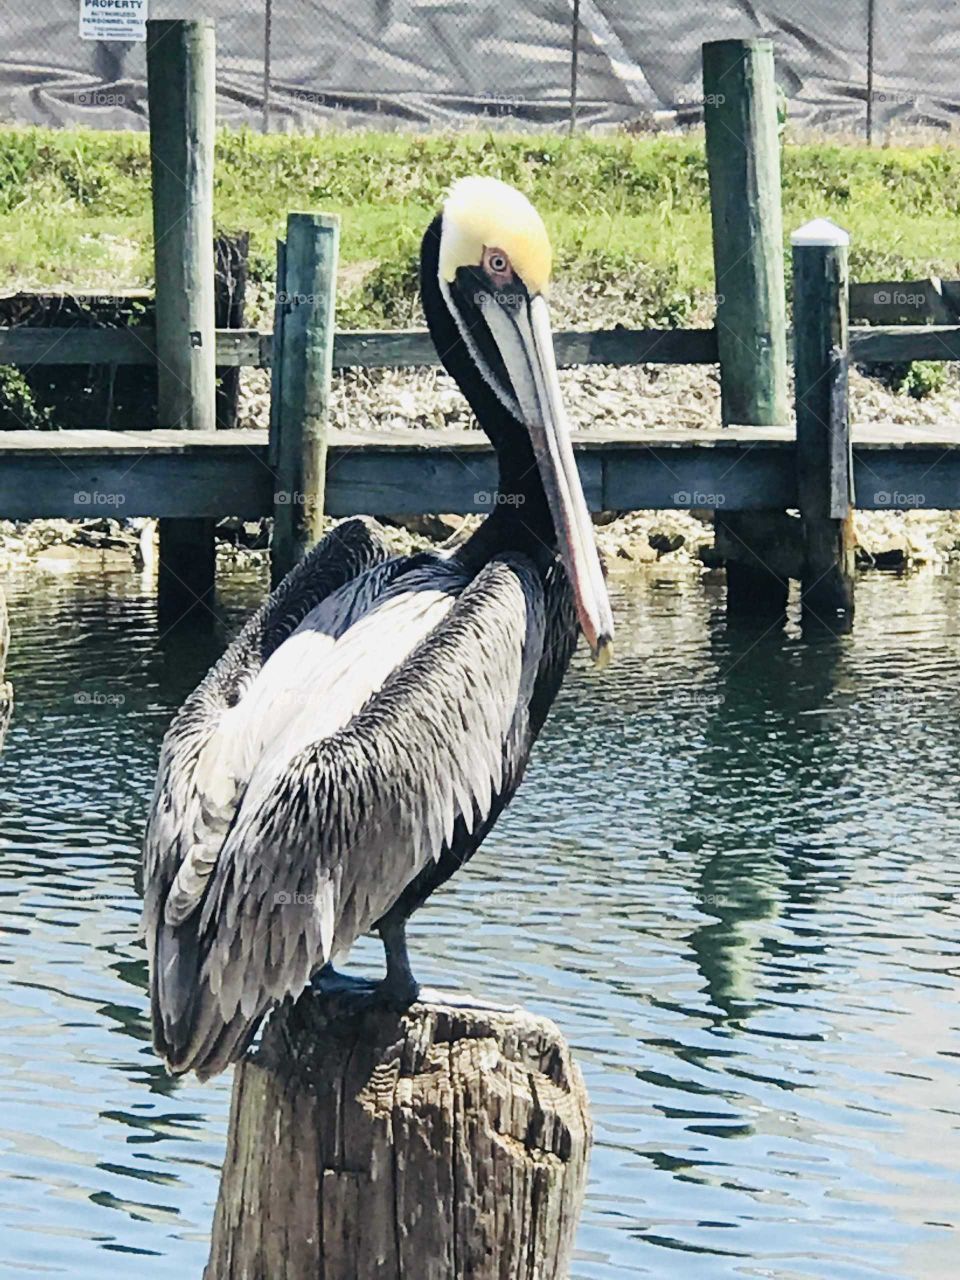 Pensacola pelicans